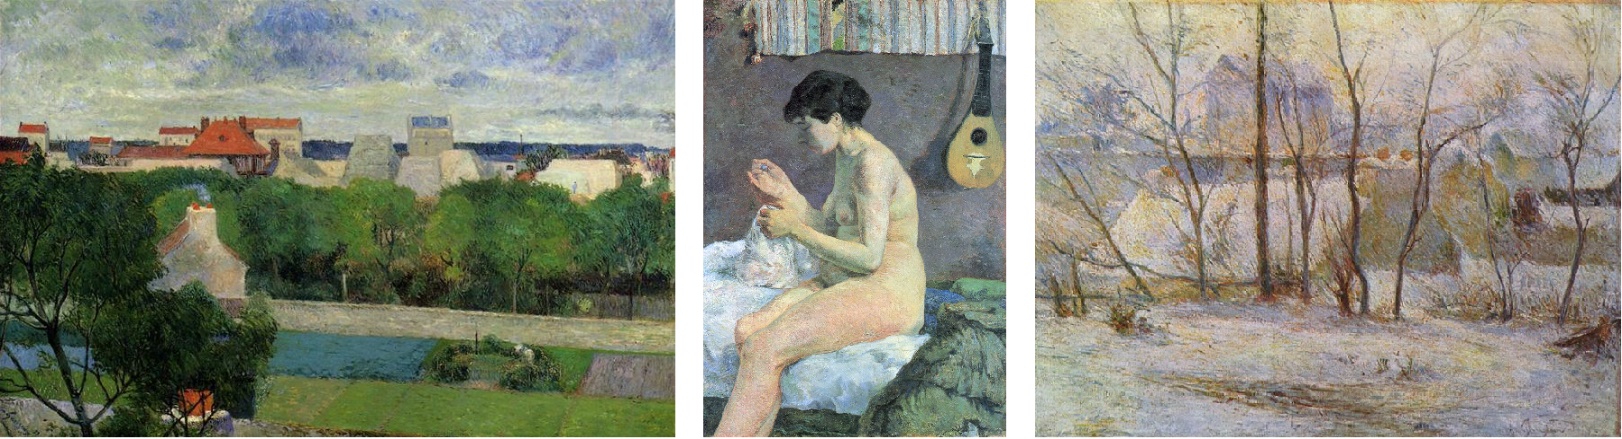 Paul Gauguin art